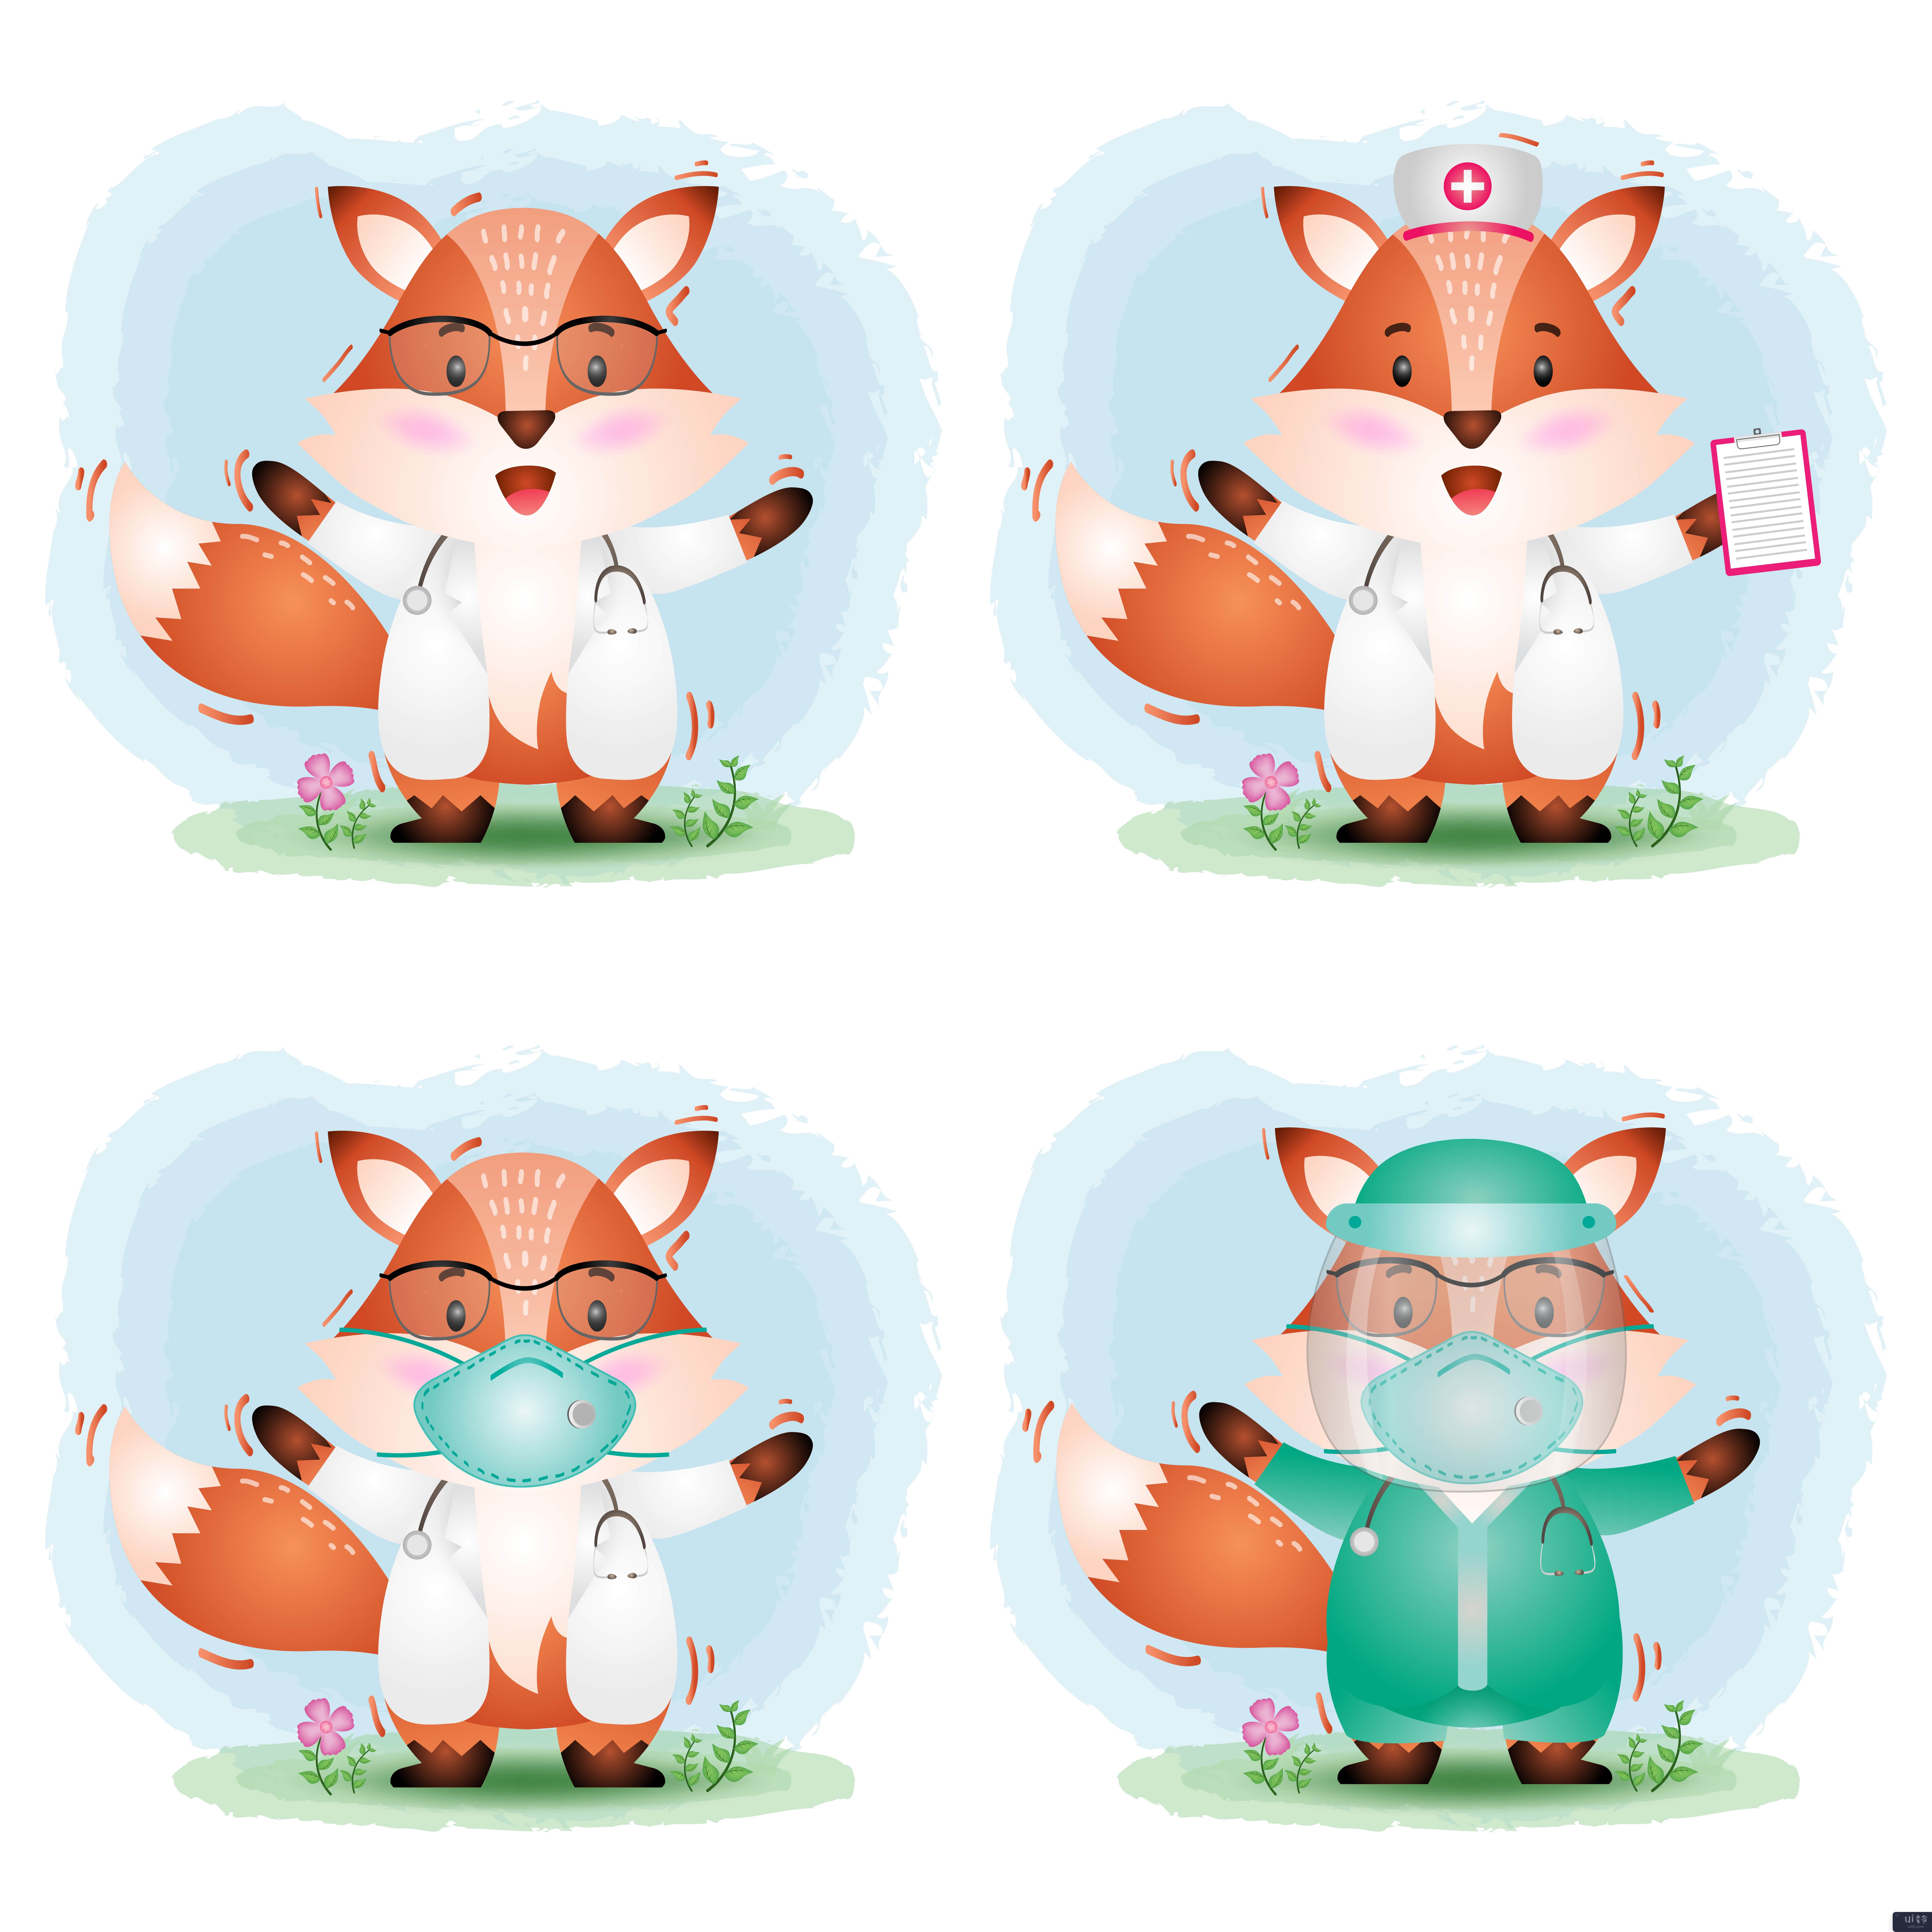 可爱的狐狸与医务人员团队医生和护士服装系列(cute fox with medical staff team doctor and nurse costume collection)插图